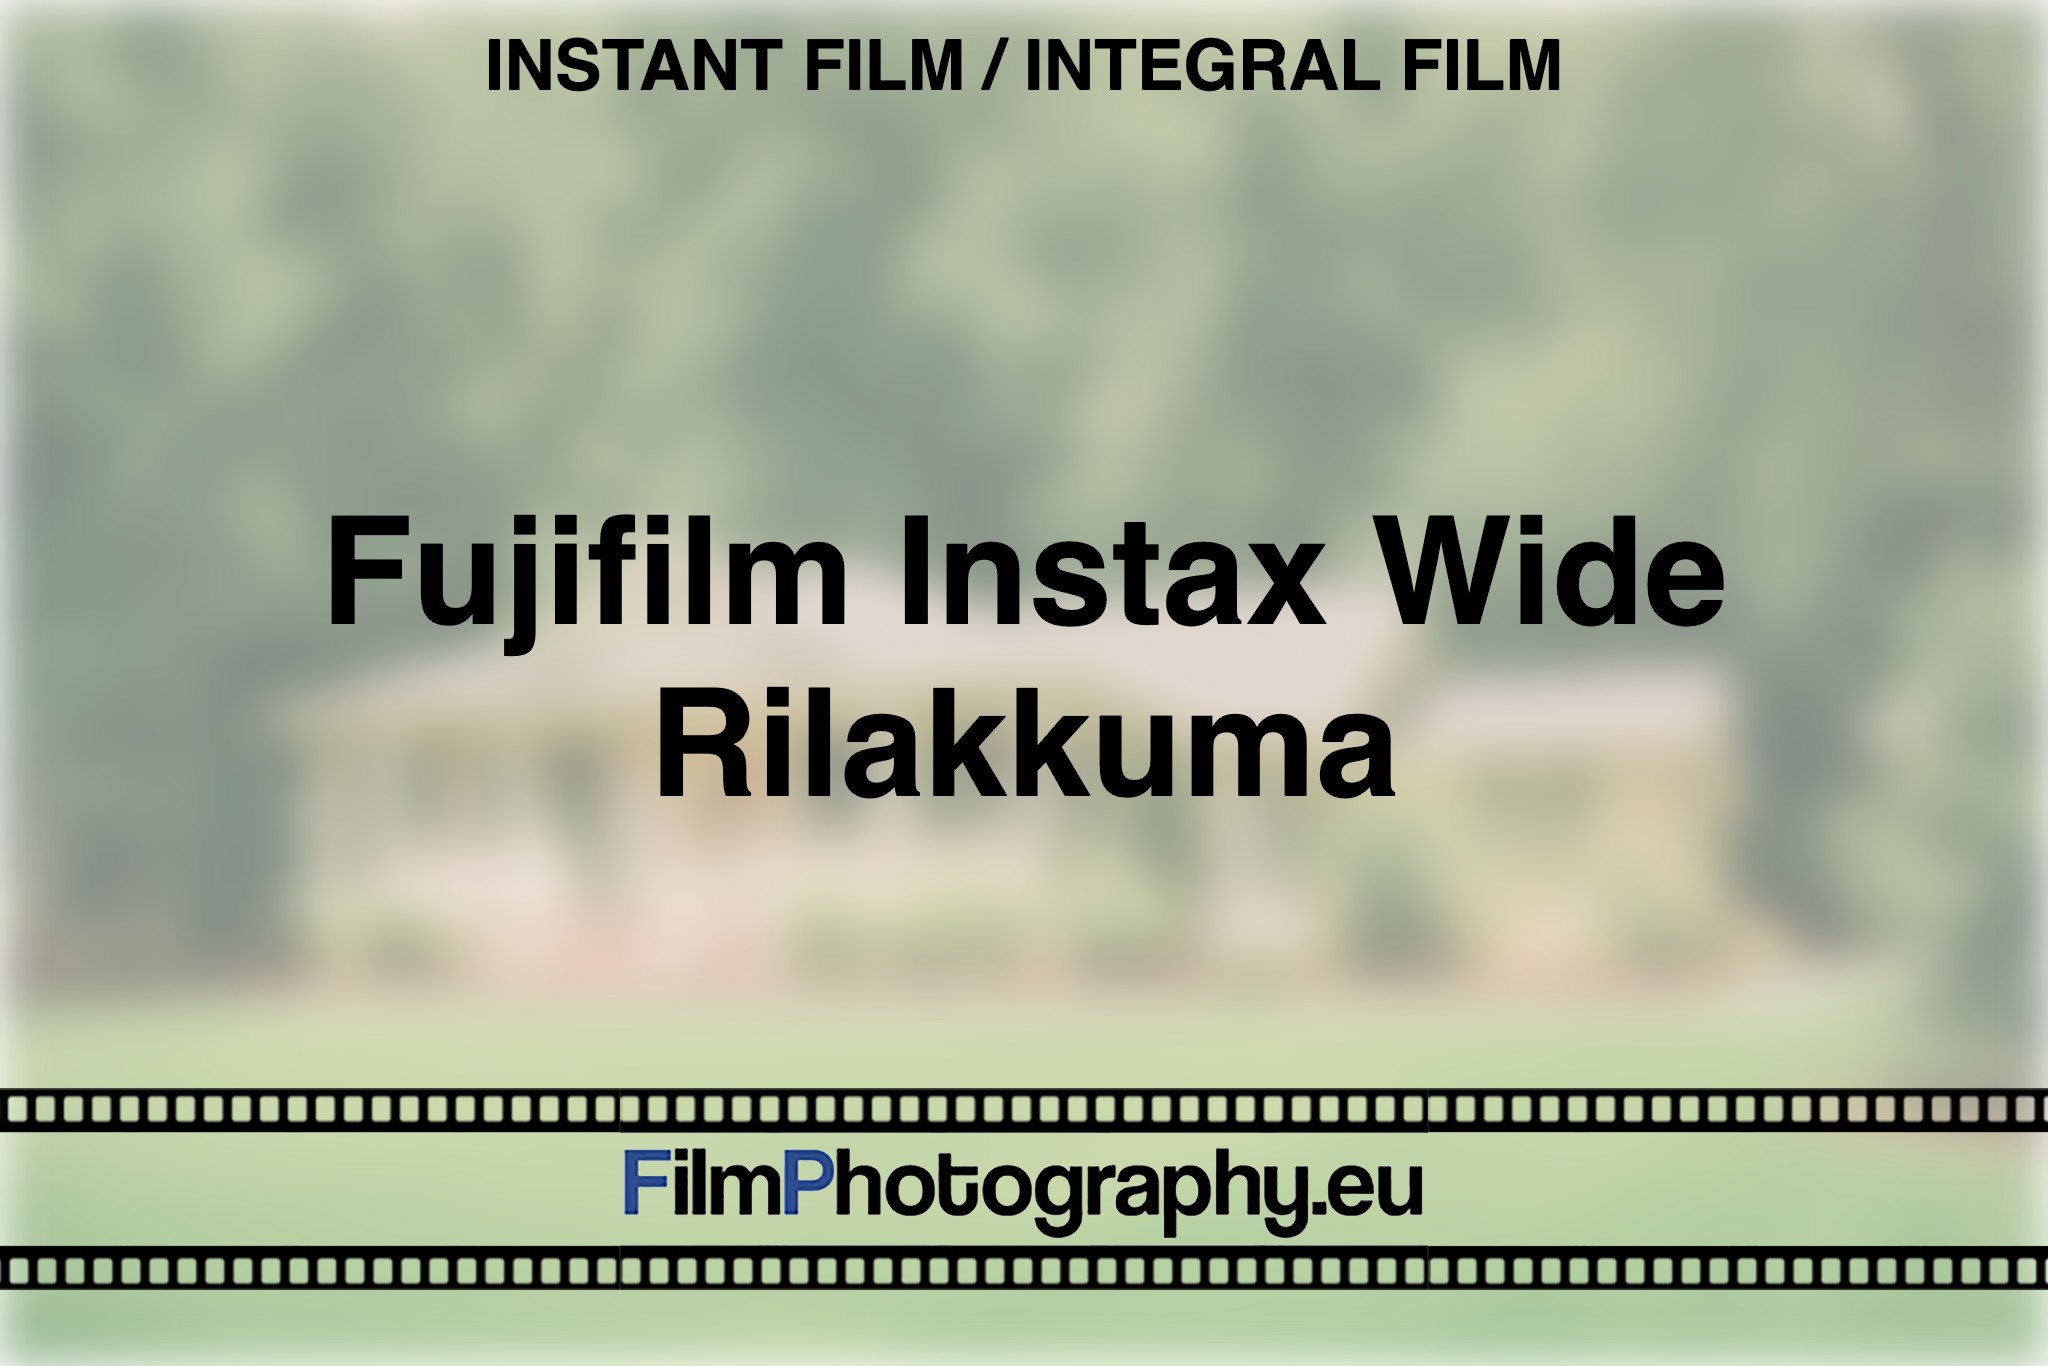 fujifilm-instax-wide-rilakkuma-instant-film-integral-film-bnv